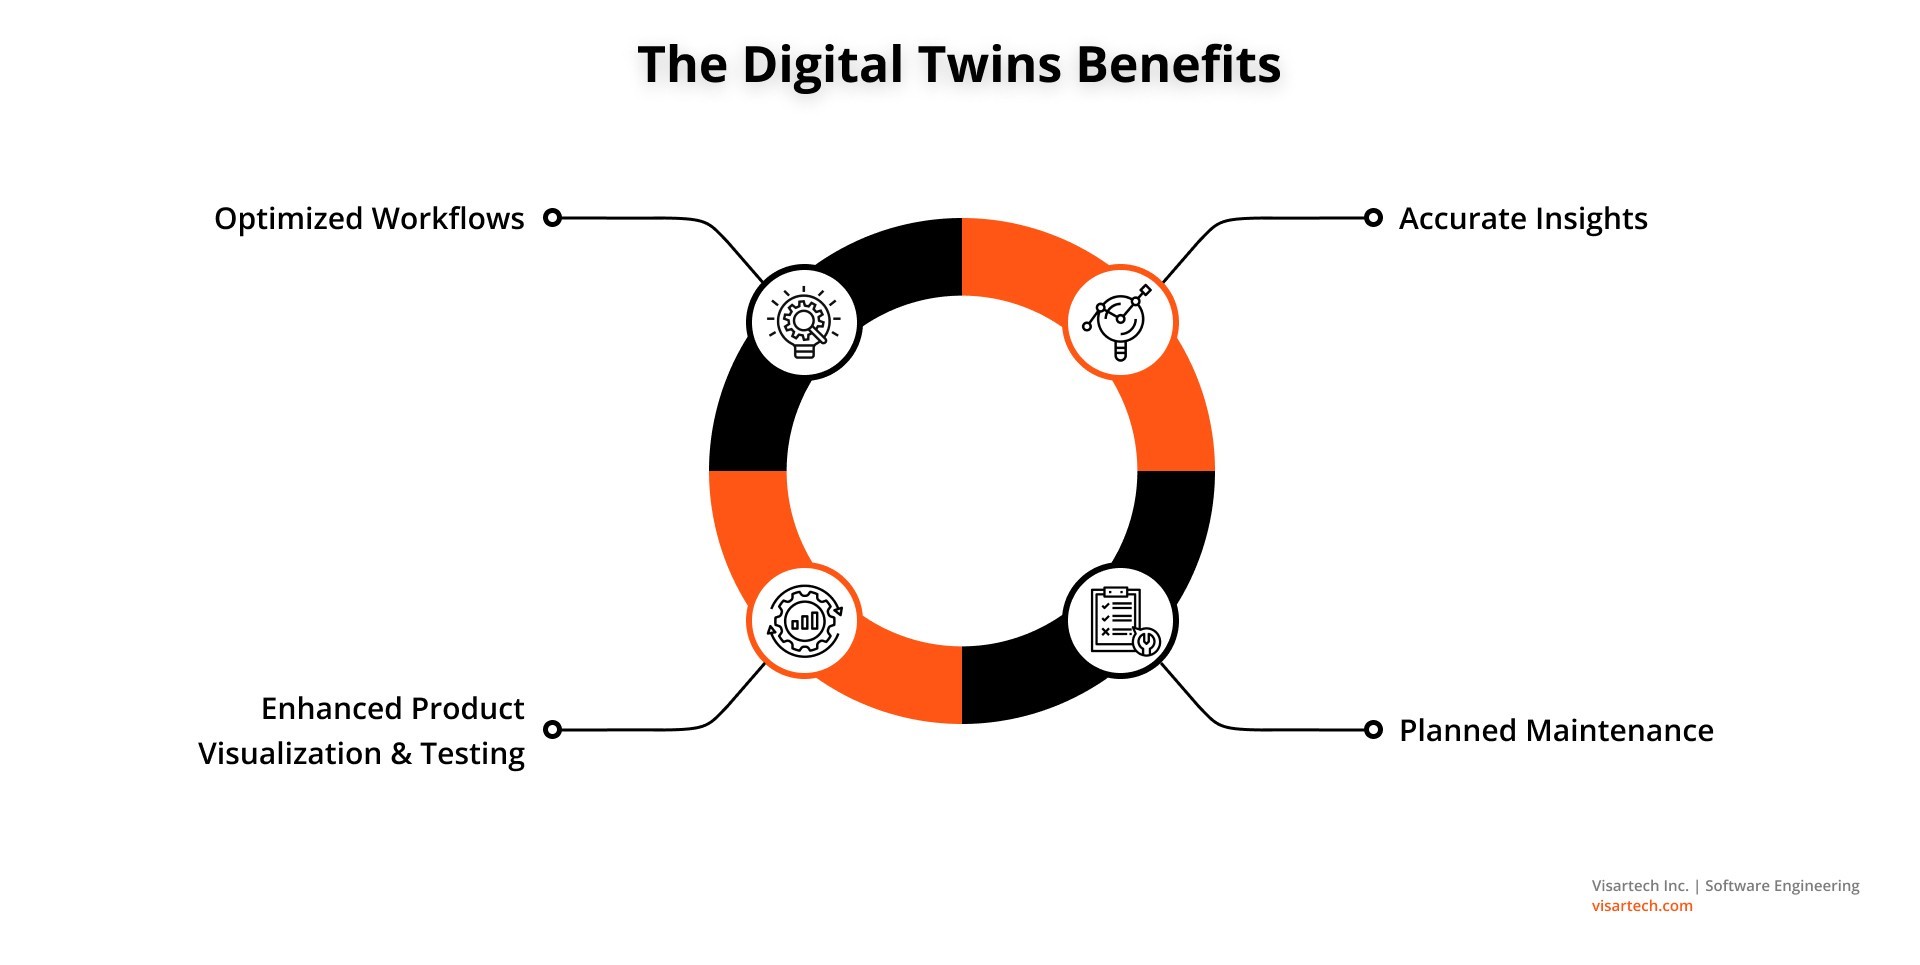 The Digital Twins Benefits - Visartech Blog